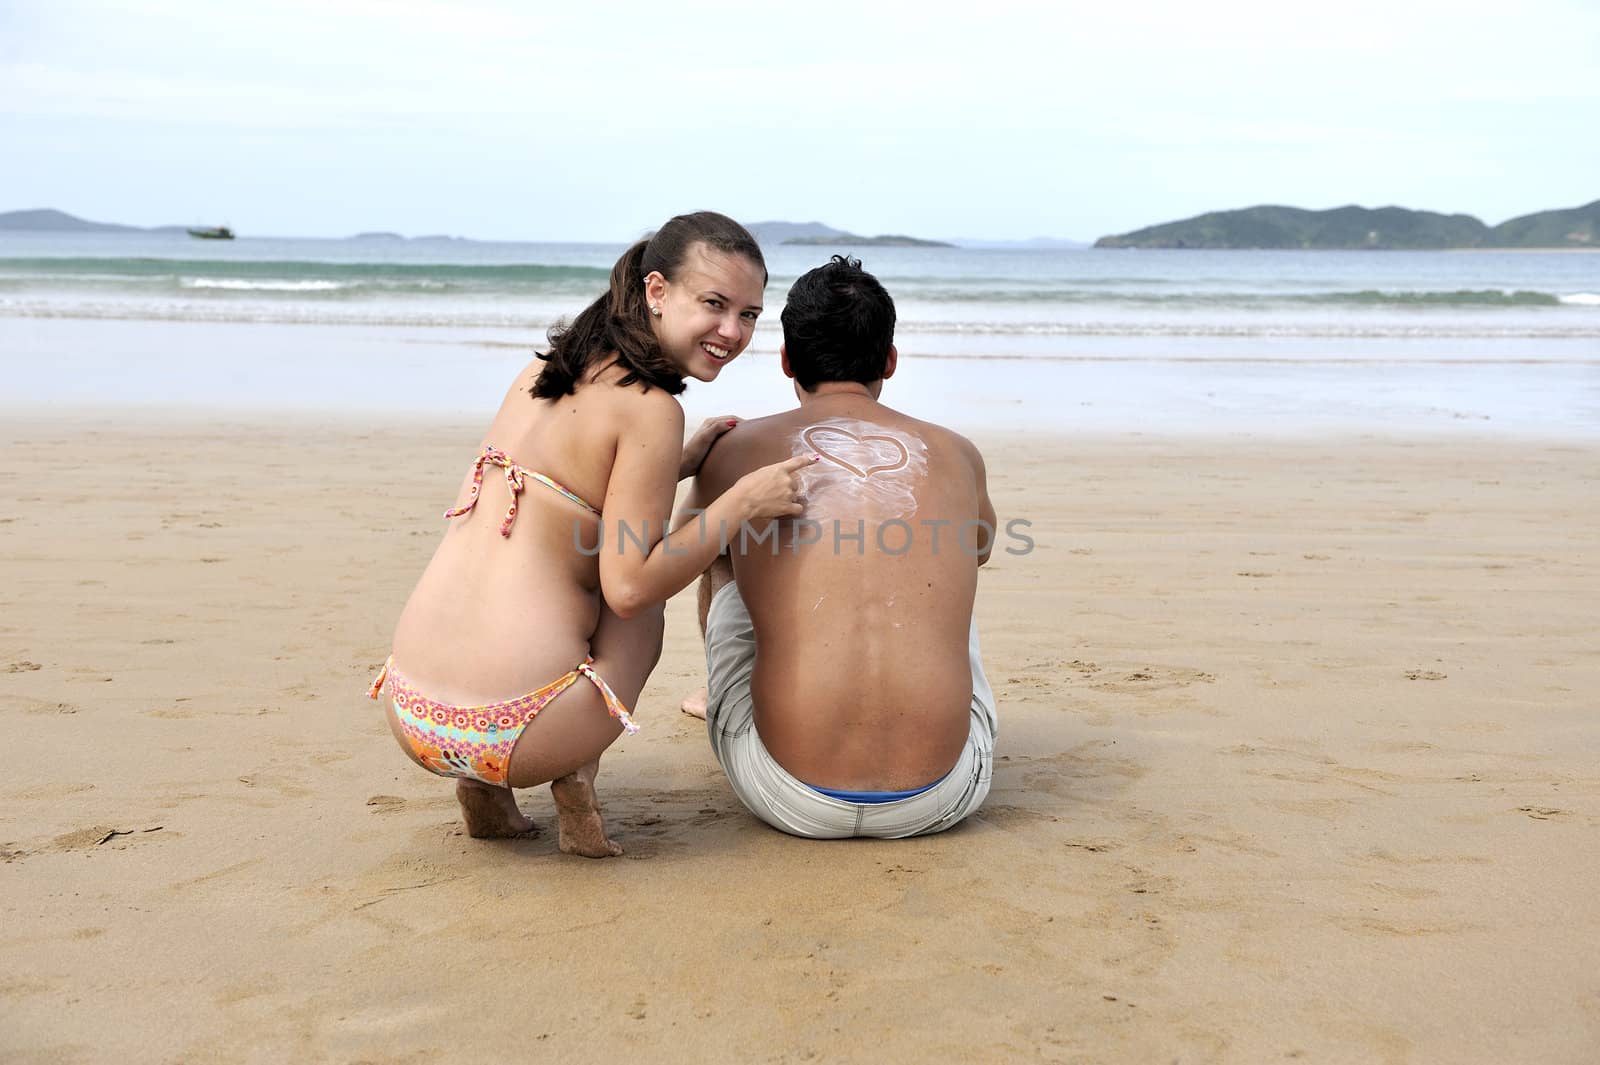 Loving couple having fun on the beach
